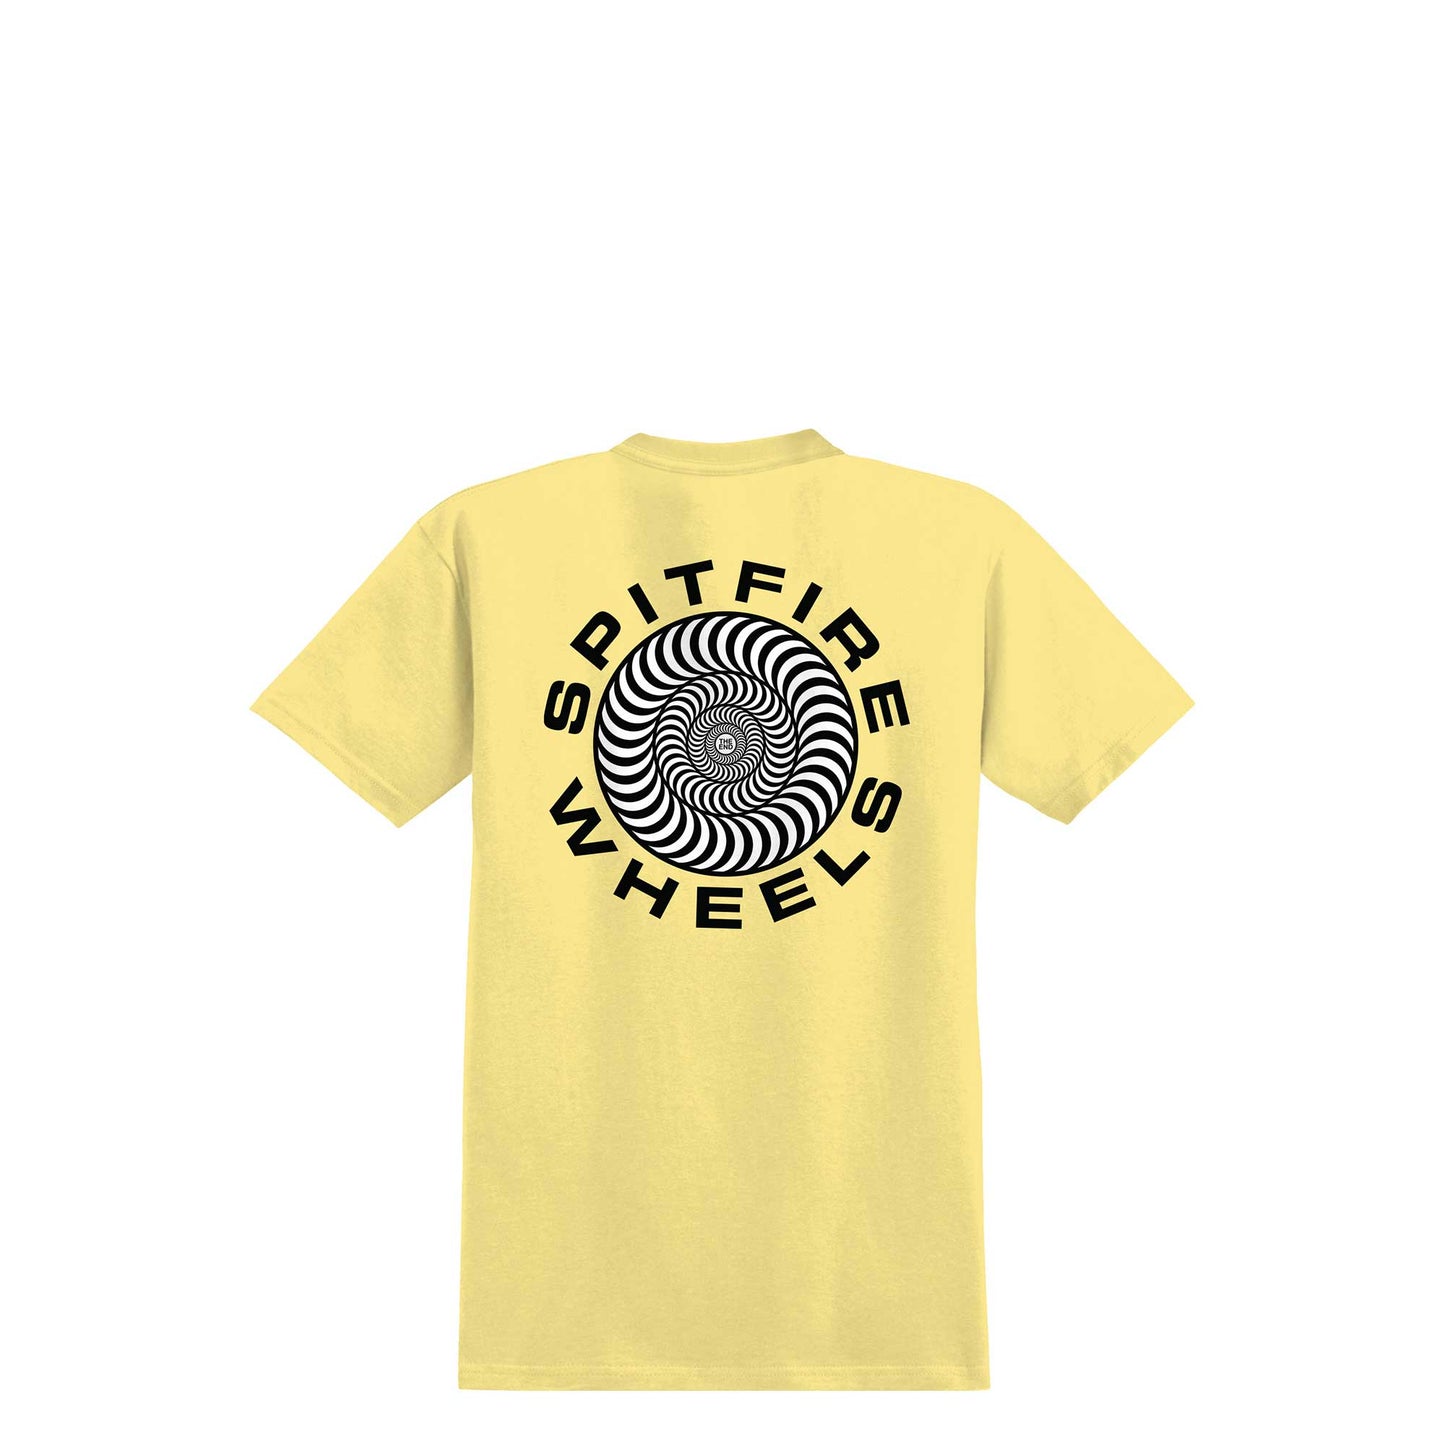 Spitfire Classic 87' Swirl S/S T-Shirt, banana w/ black & white prints - Tiki Room Skateboards - 1